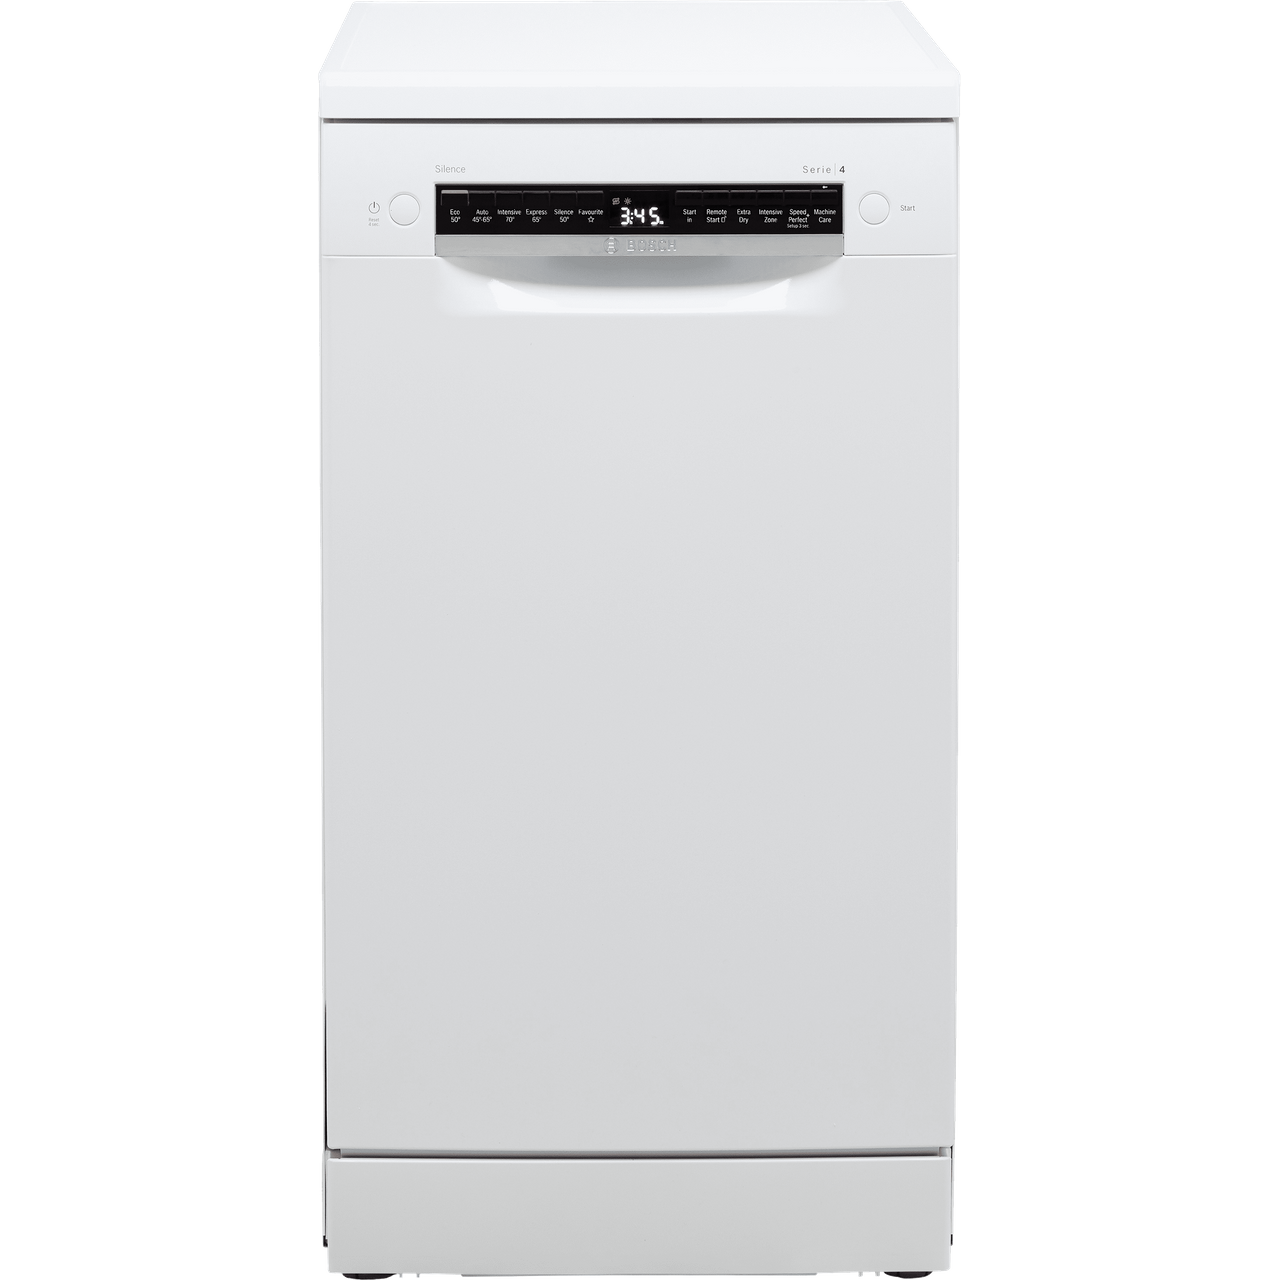 Bosch Serie 4 Slimline Dishwasher - White - E Rated